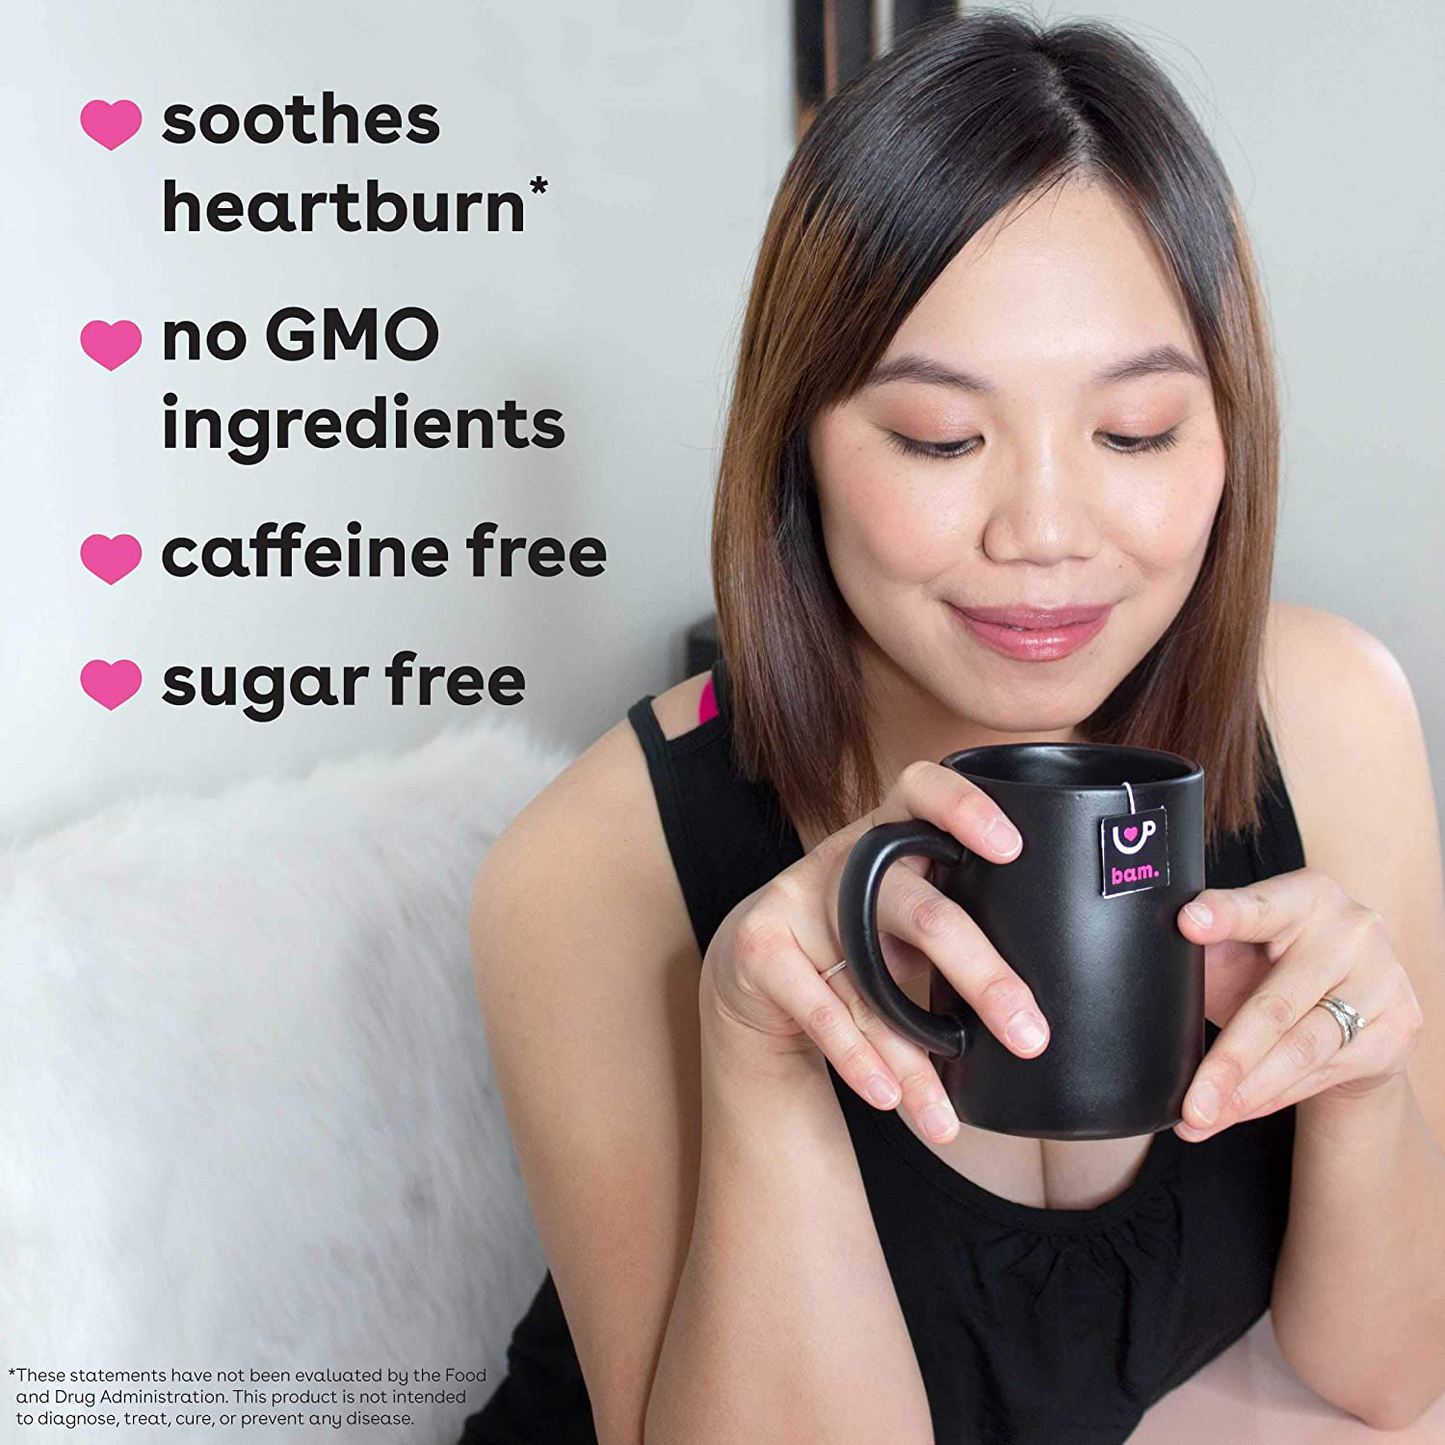 Bamboobies Women's Energy Boost Drink Mix, Raspberry Lemonade, Breastfeeding Supplement Packets, 20 Packets , 4.2 Ounce (Pack of 1)